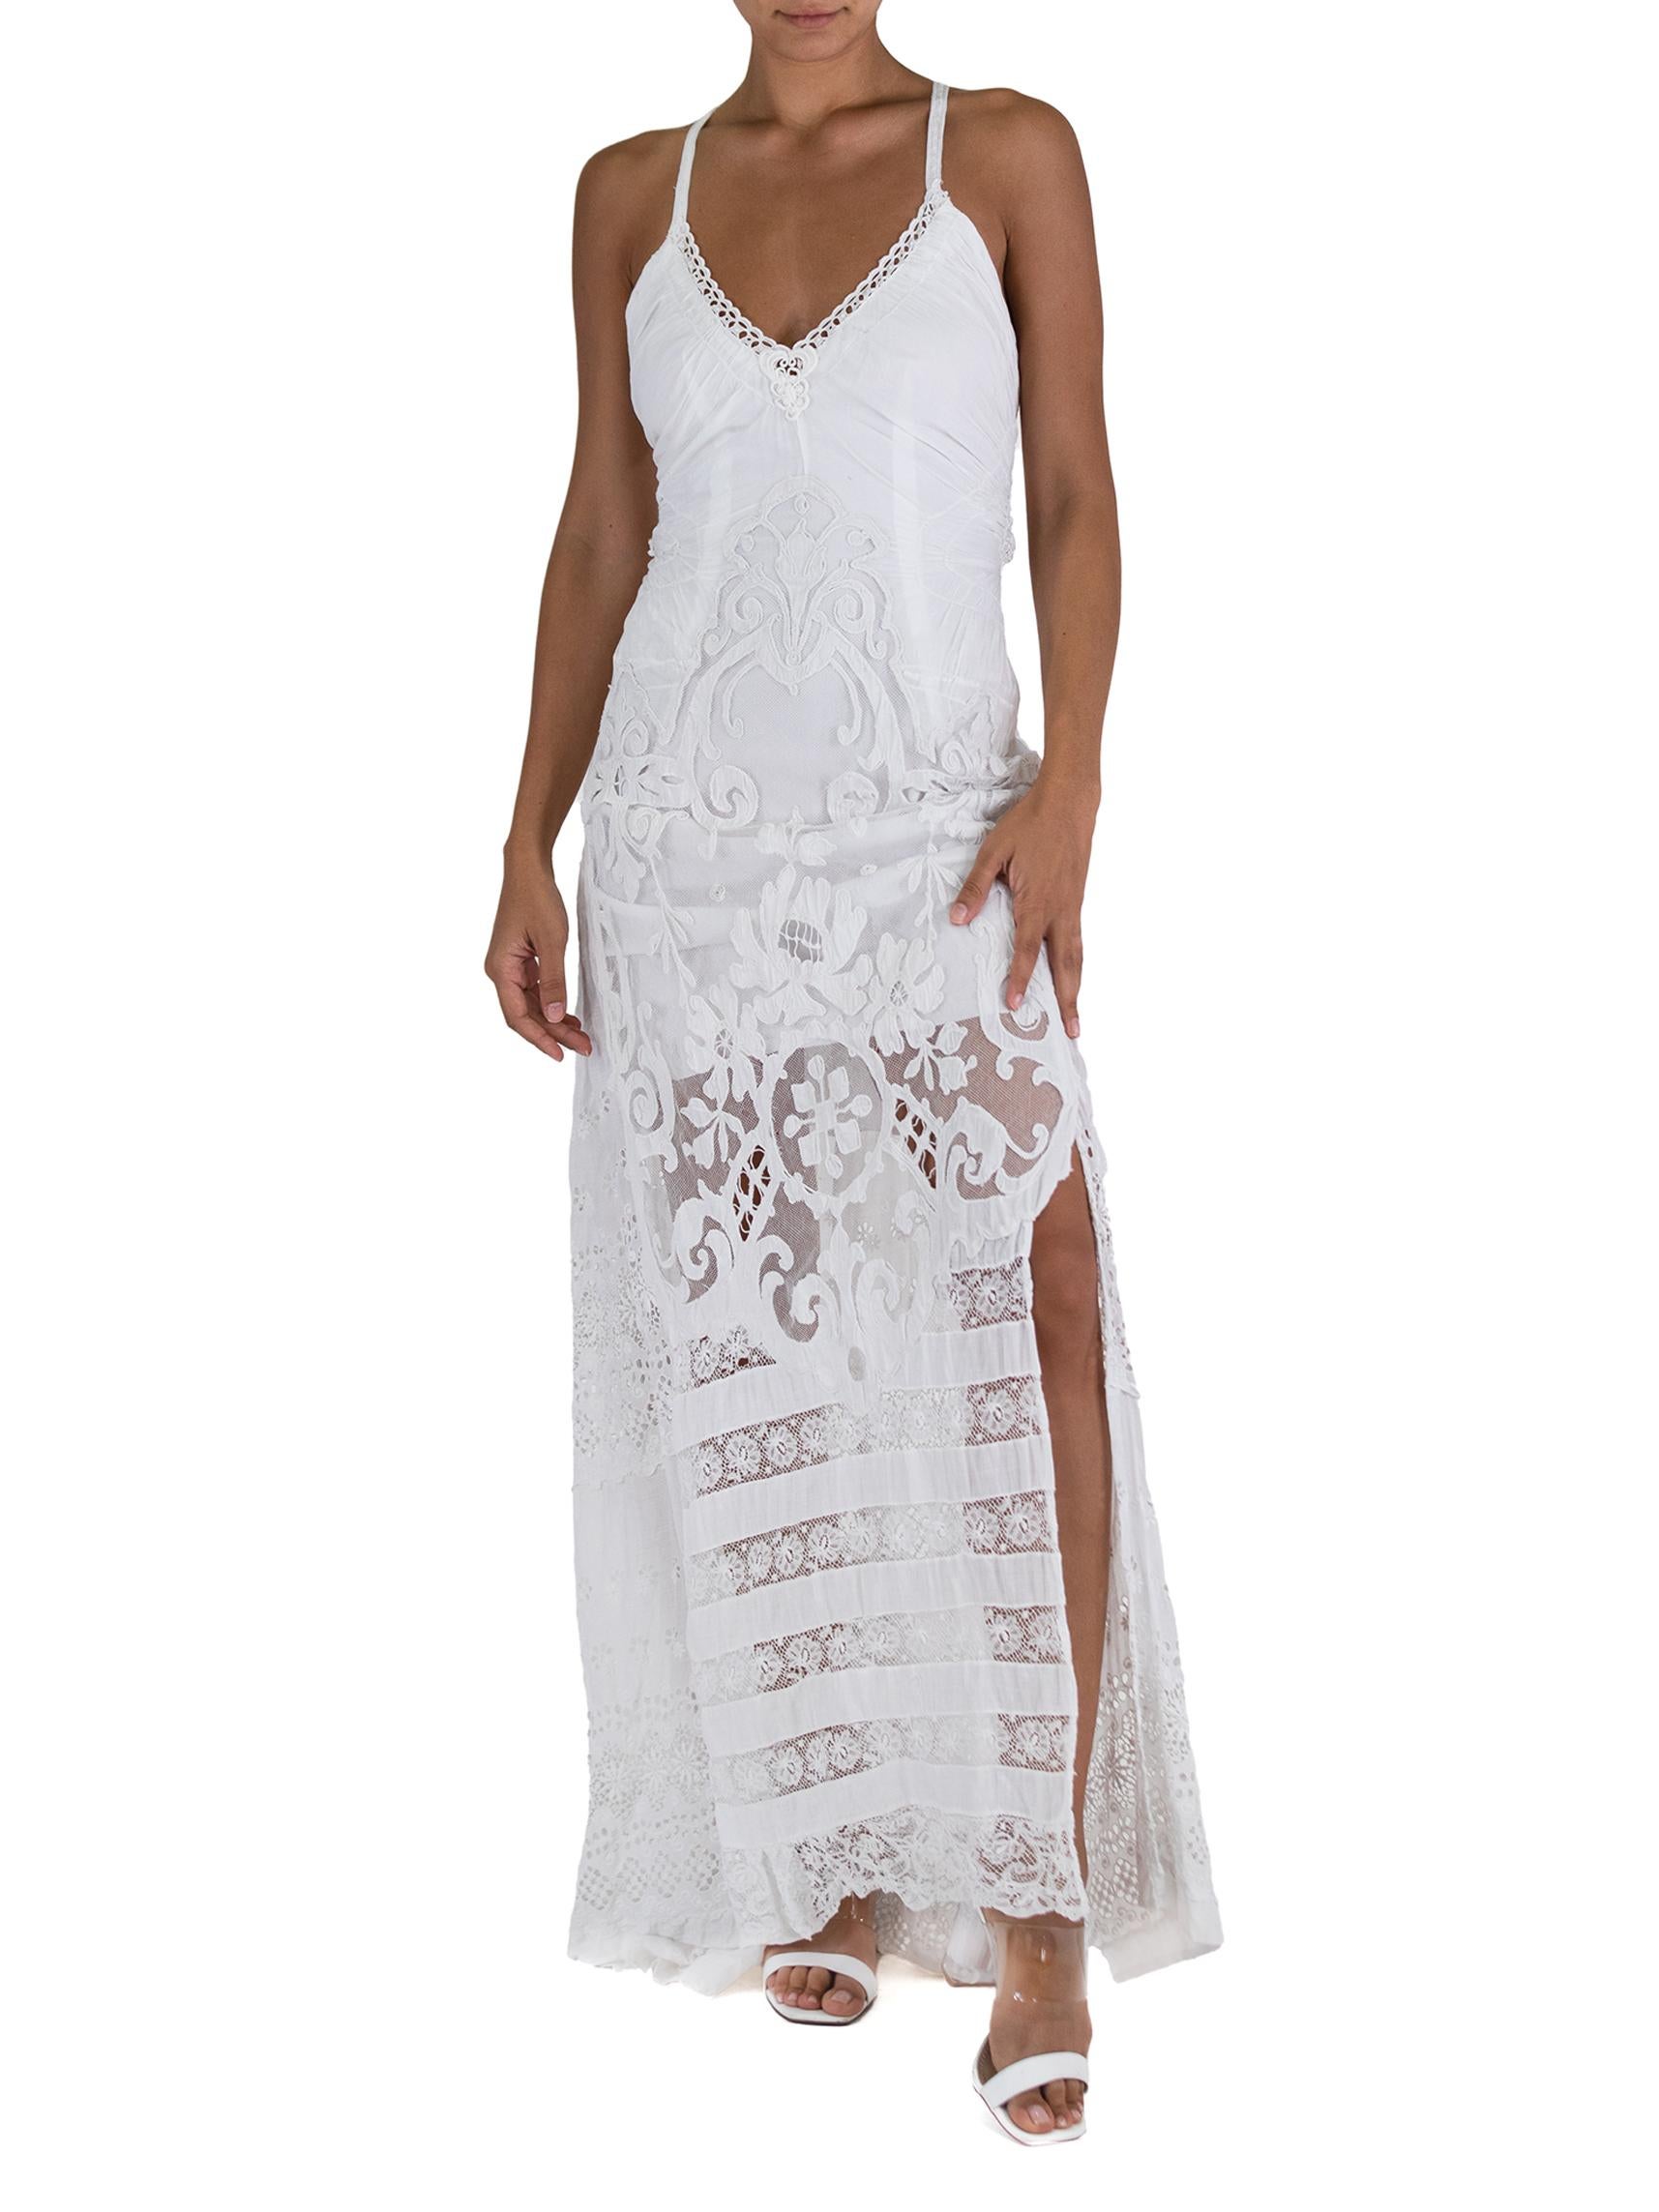 Morphew Atelier White Vintage Lace Dress For Sale 1